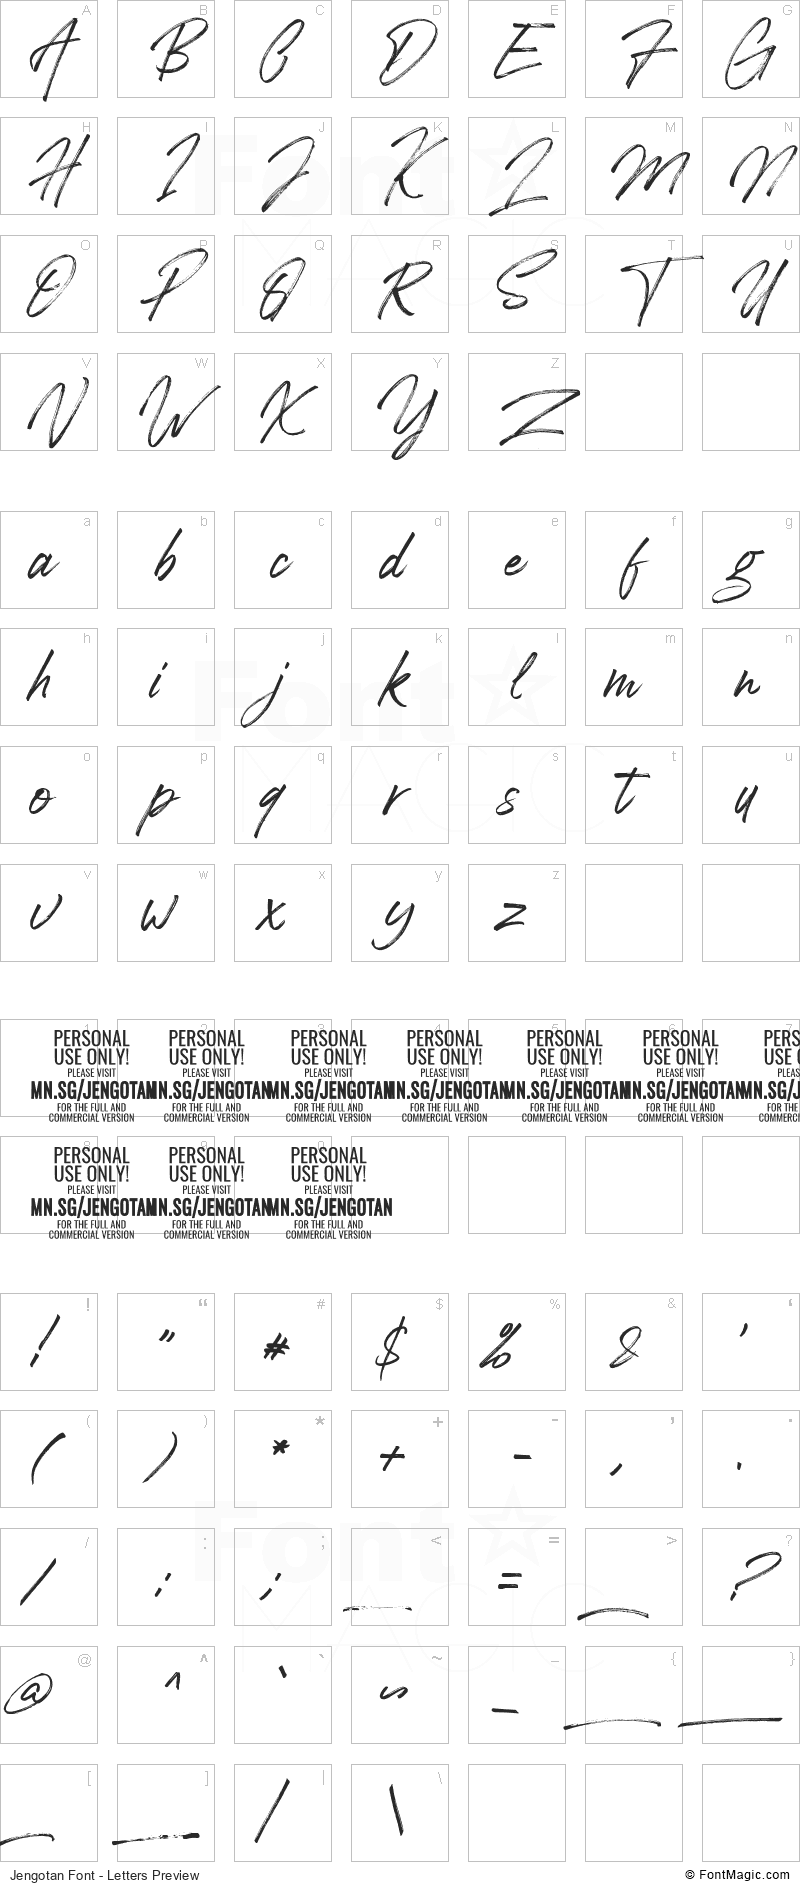 Jengotan Font - All Latters Preview Chart